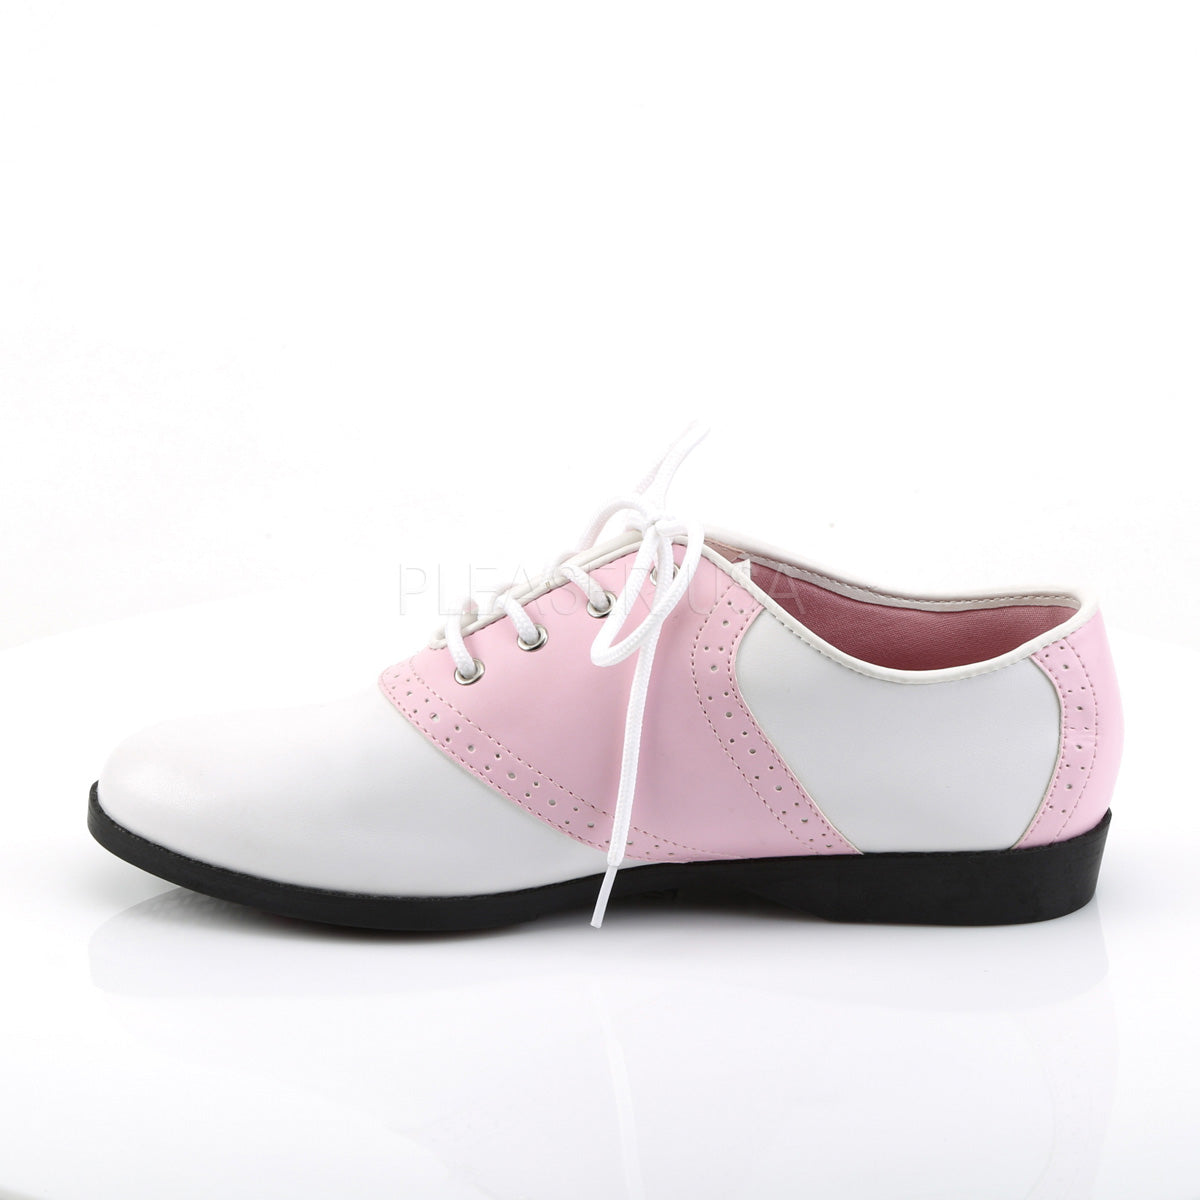 Flat Saddle Shoes Pink White | Funtasma 